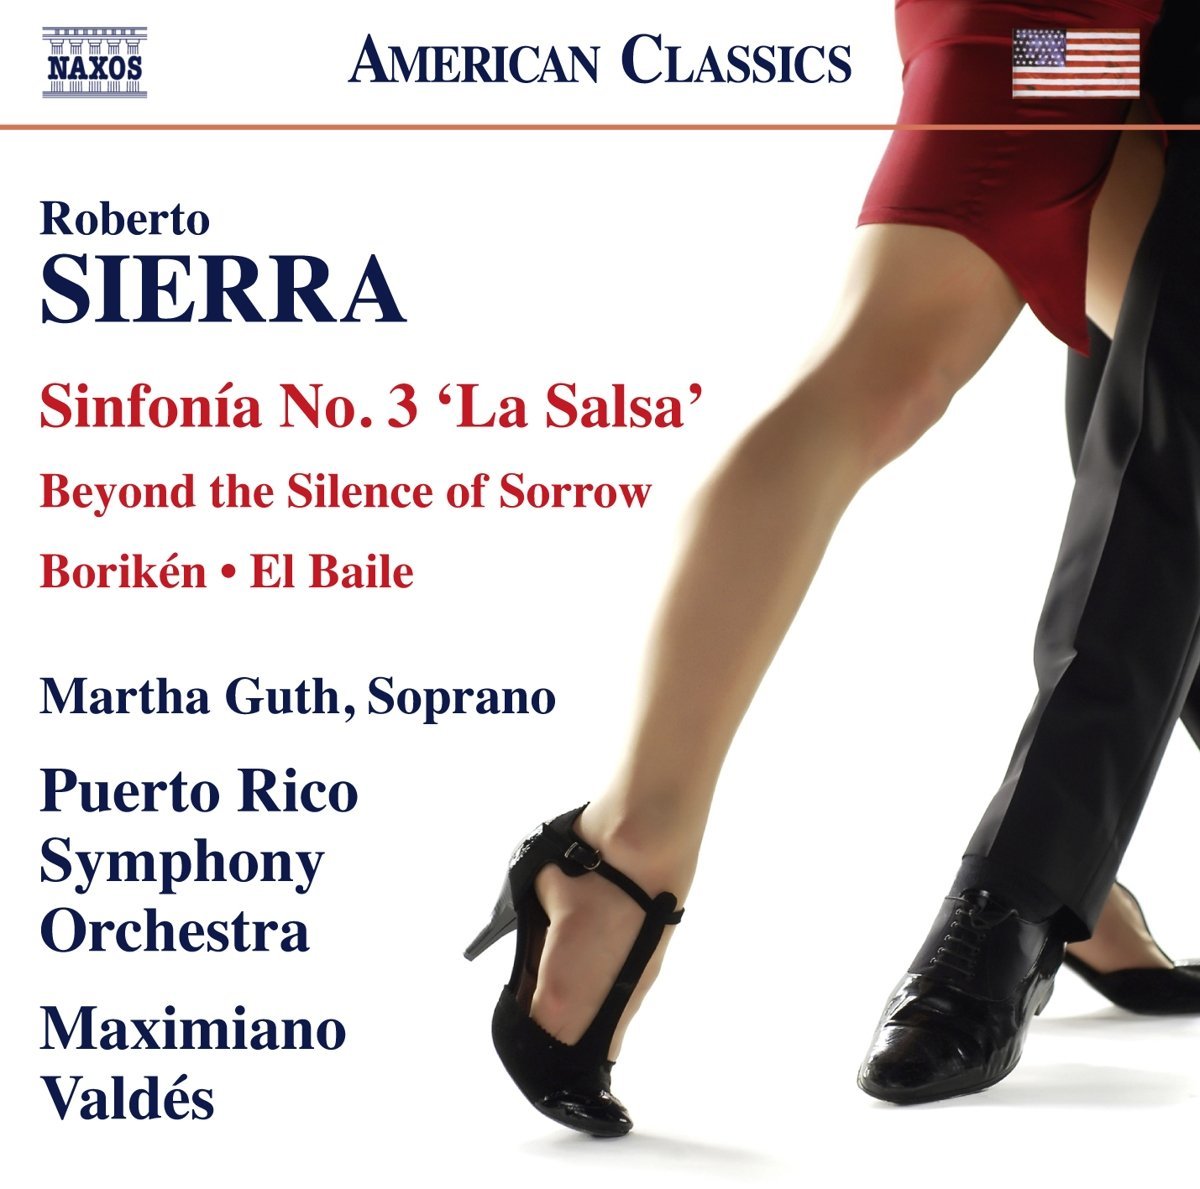 Roberto Sierra: Sinfonia No. 3 'La Salsa' [CD] Beyond the Silence of Sorrow - Boriken - El Baile